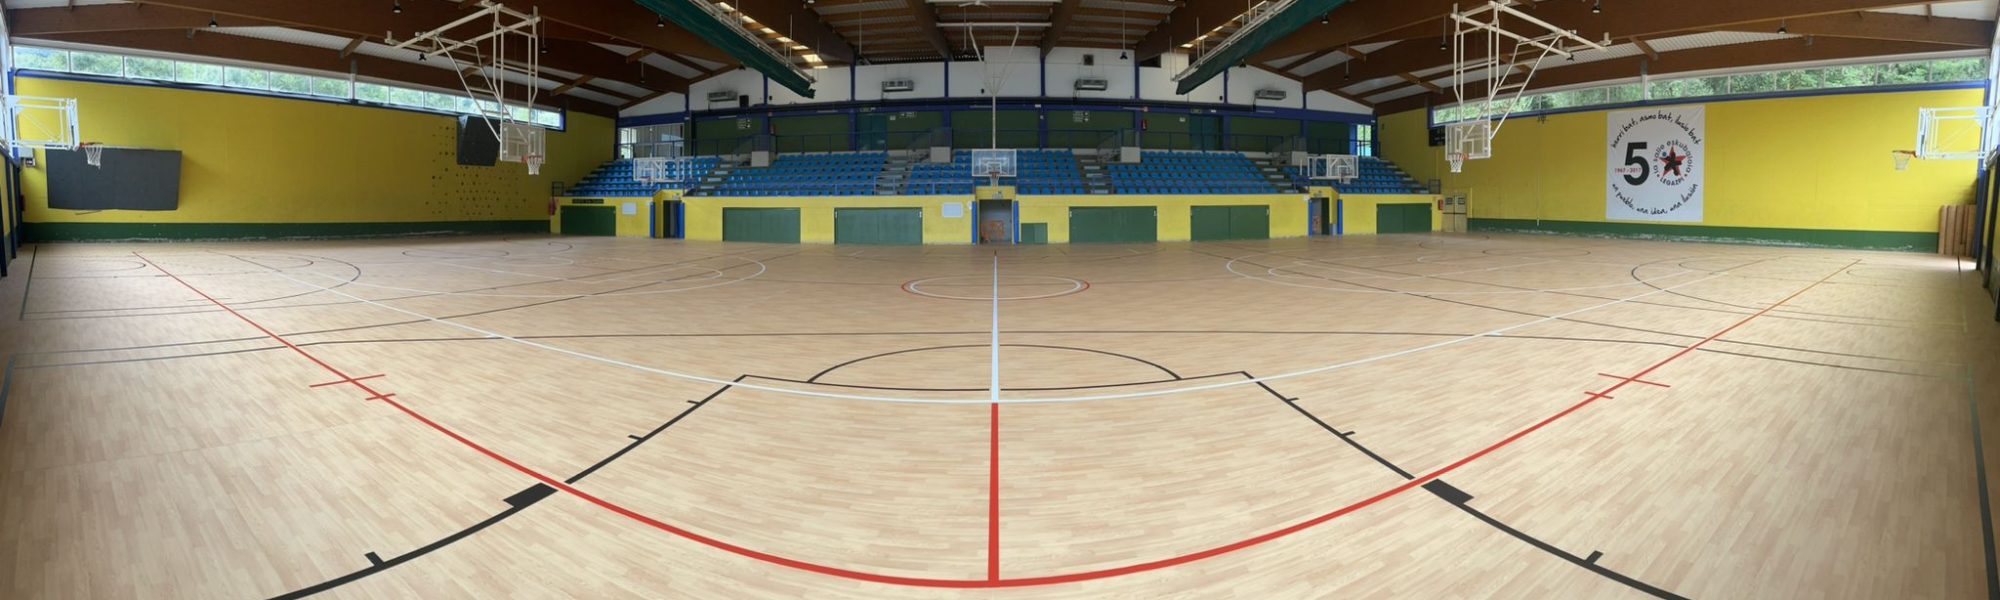 Un nuevo pavimento de ‘hierro’ para Bikuña: Legazpi vuelve a confiar en Mondo para renovar su polideportivo